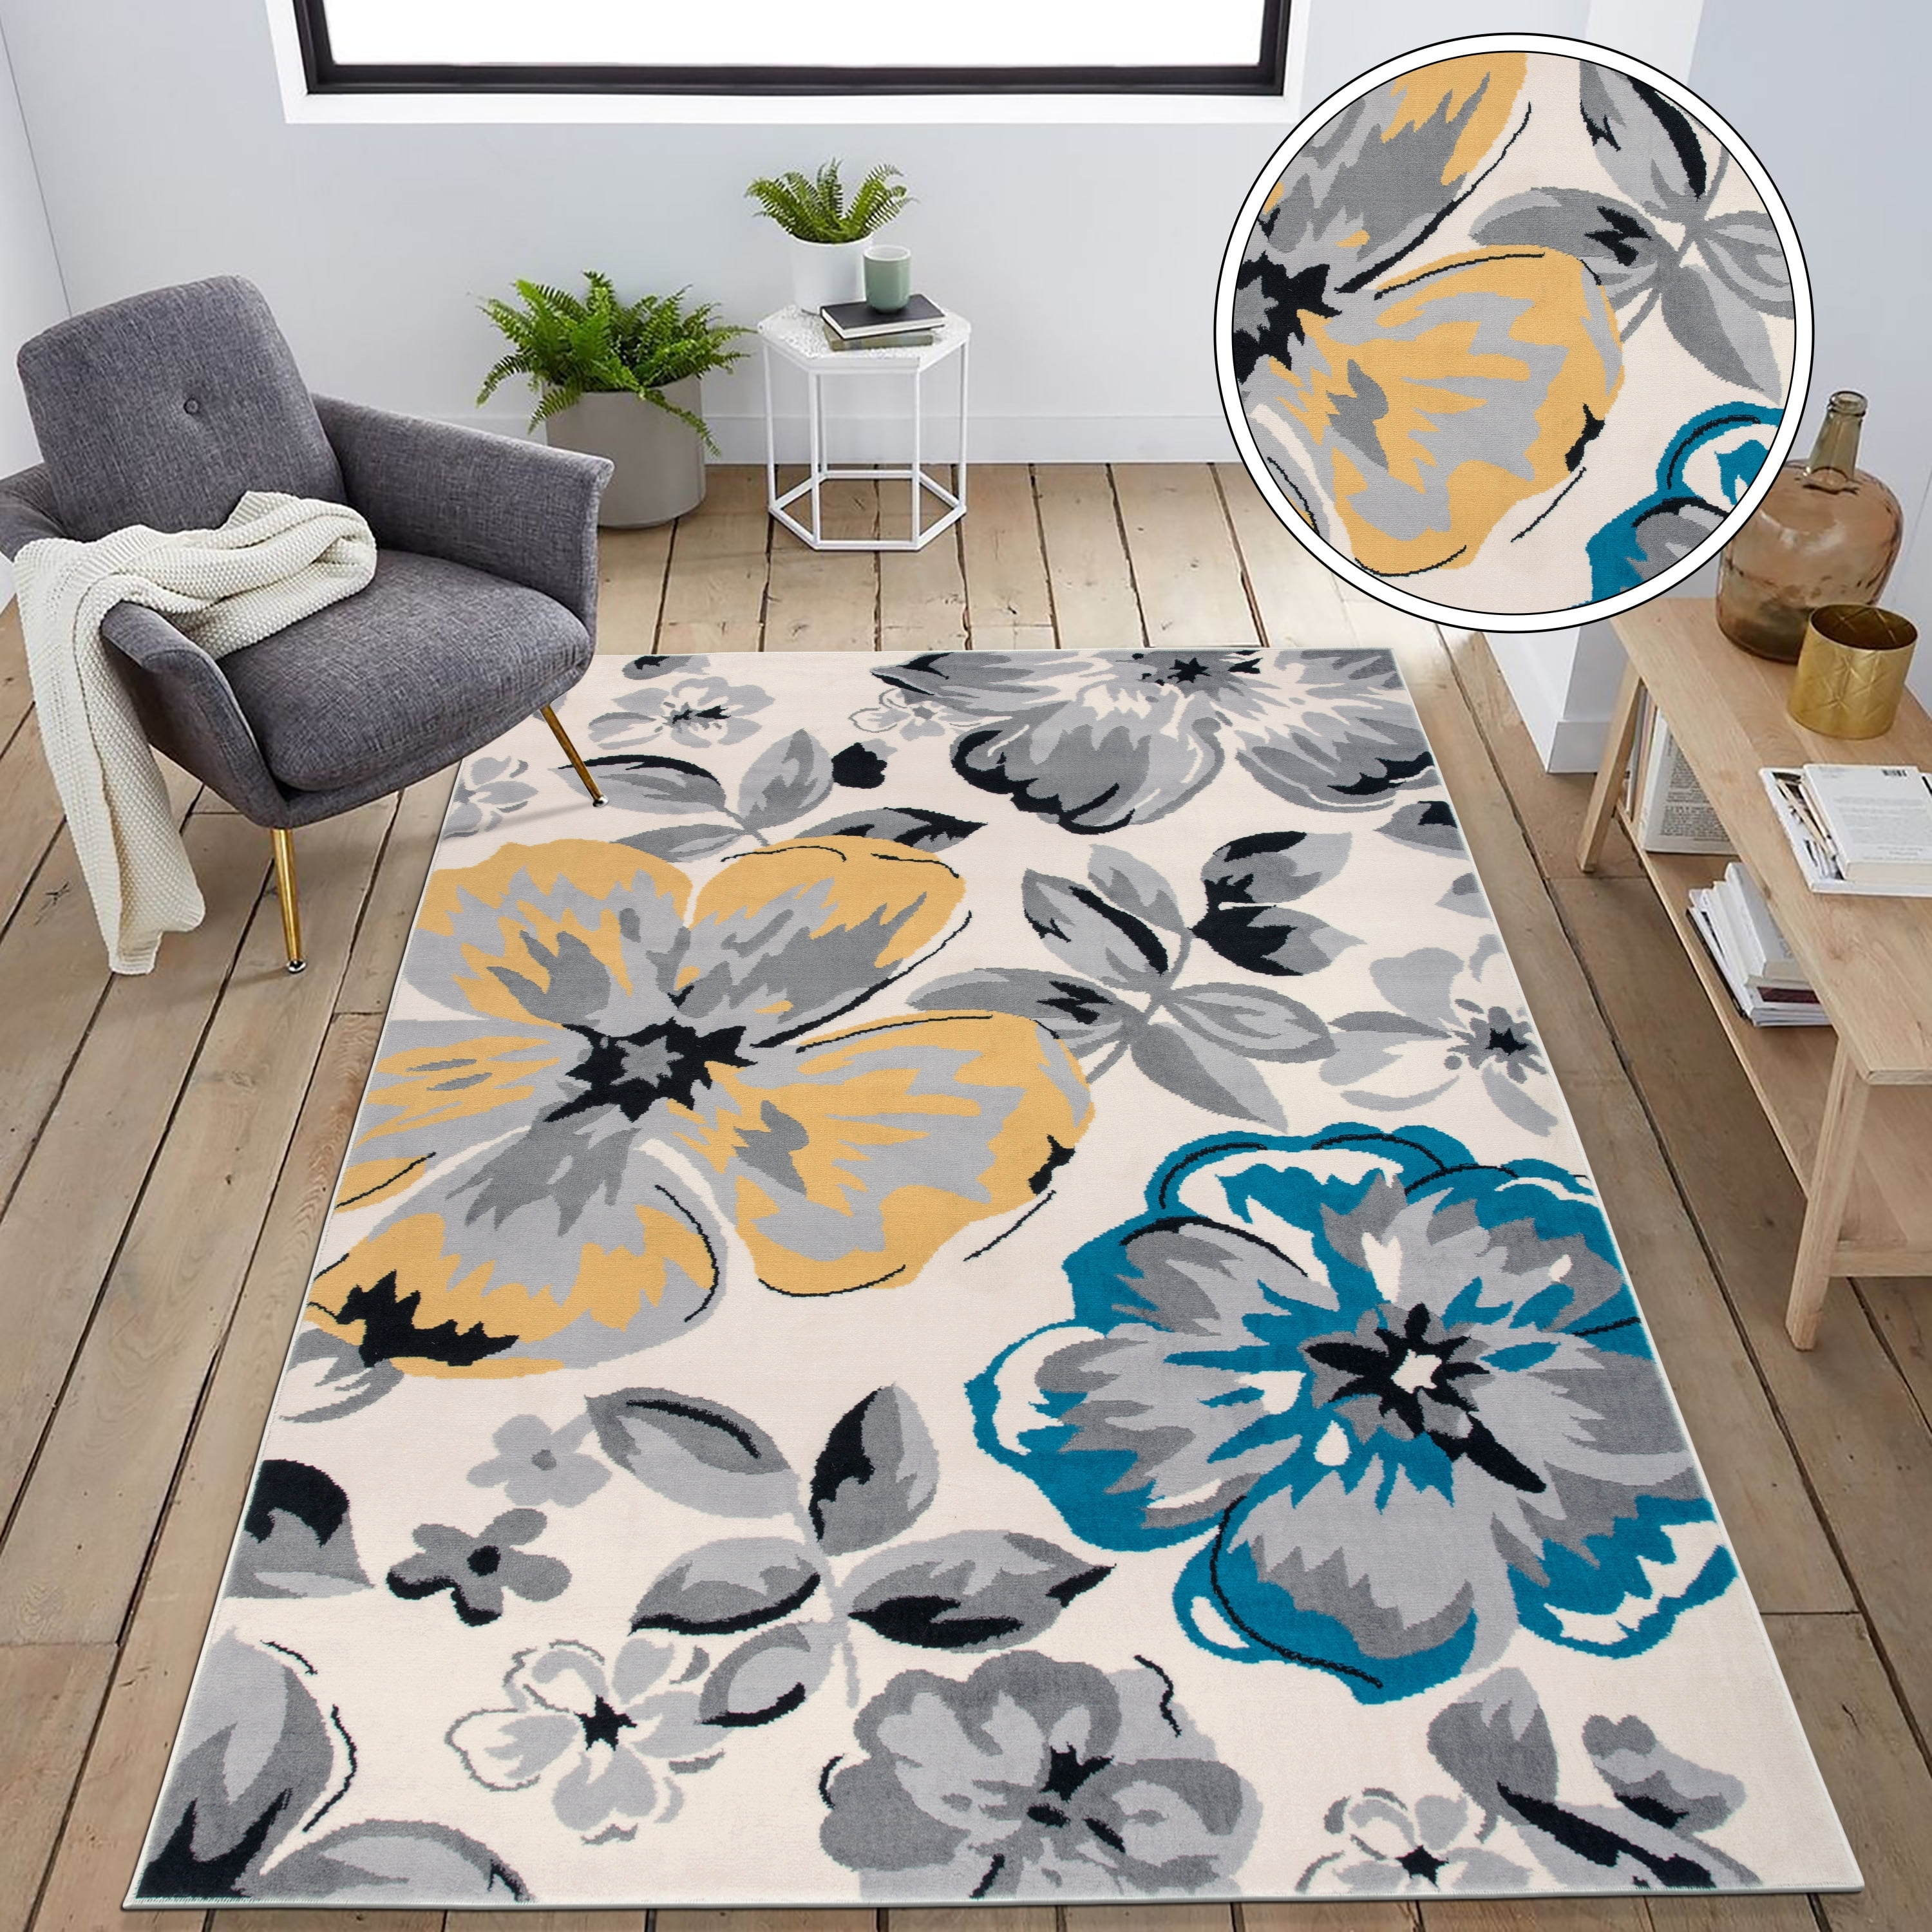 Floral,Cute Design Anti-Slip Floor MAT 60x 72 Scottish Houndstooth Abstract Design Area Rug 